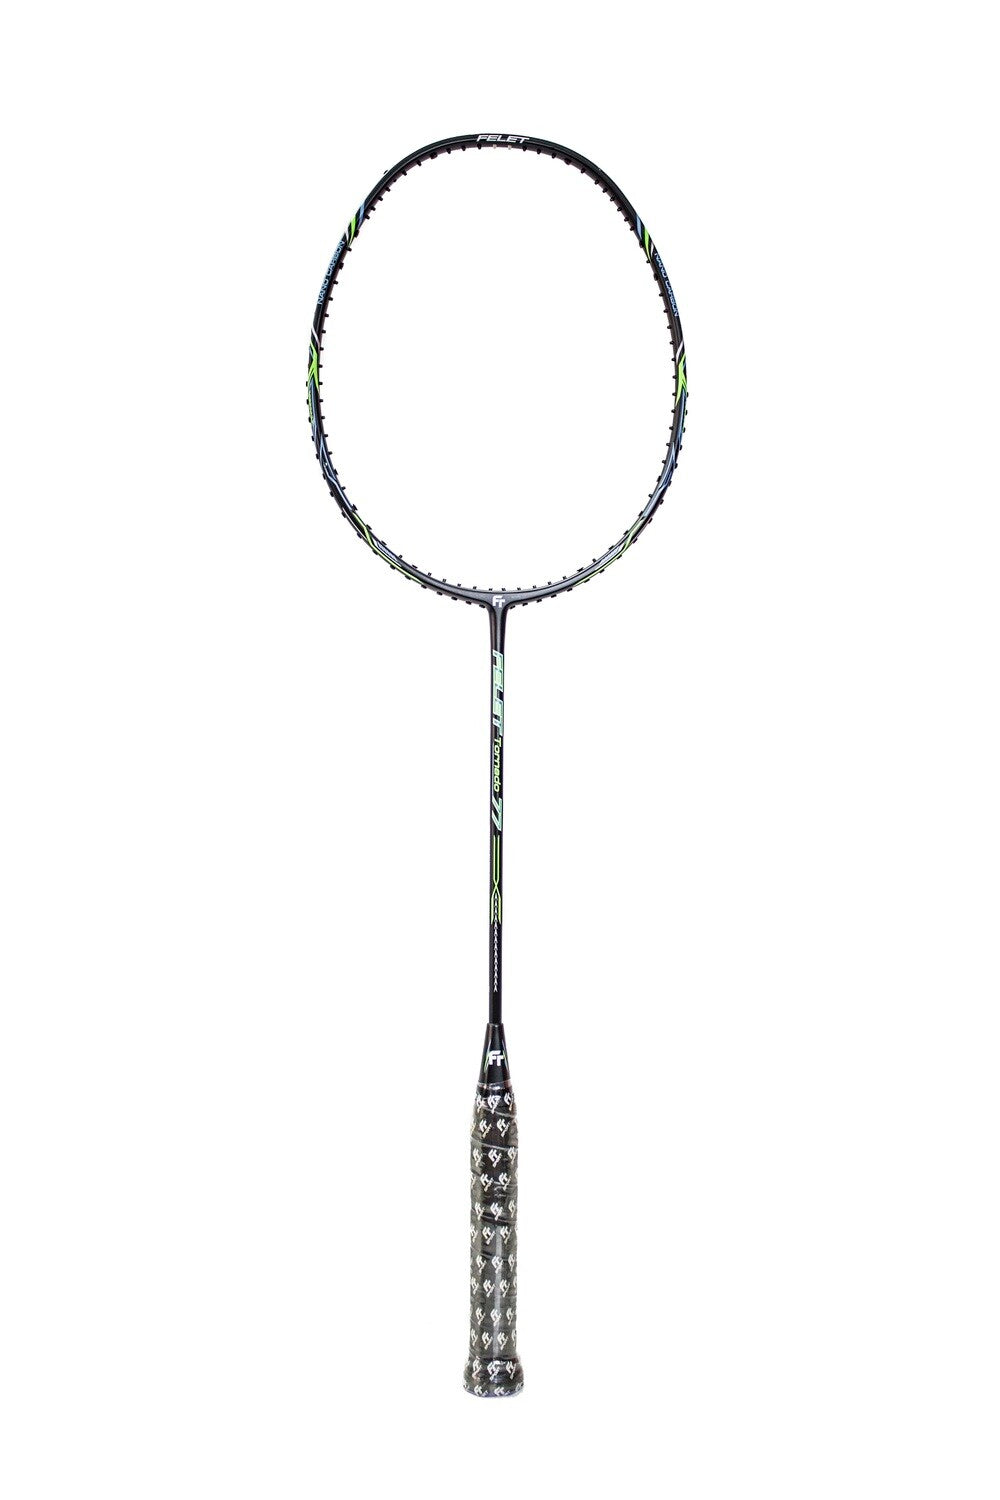 Felet Tornado 77 Badminton Racket